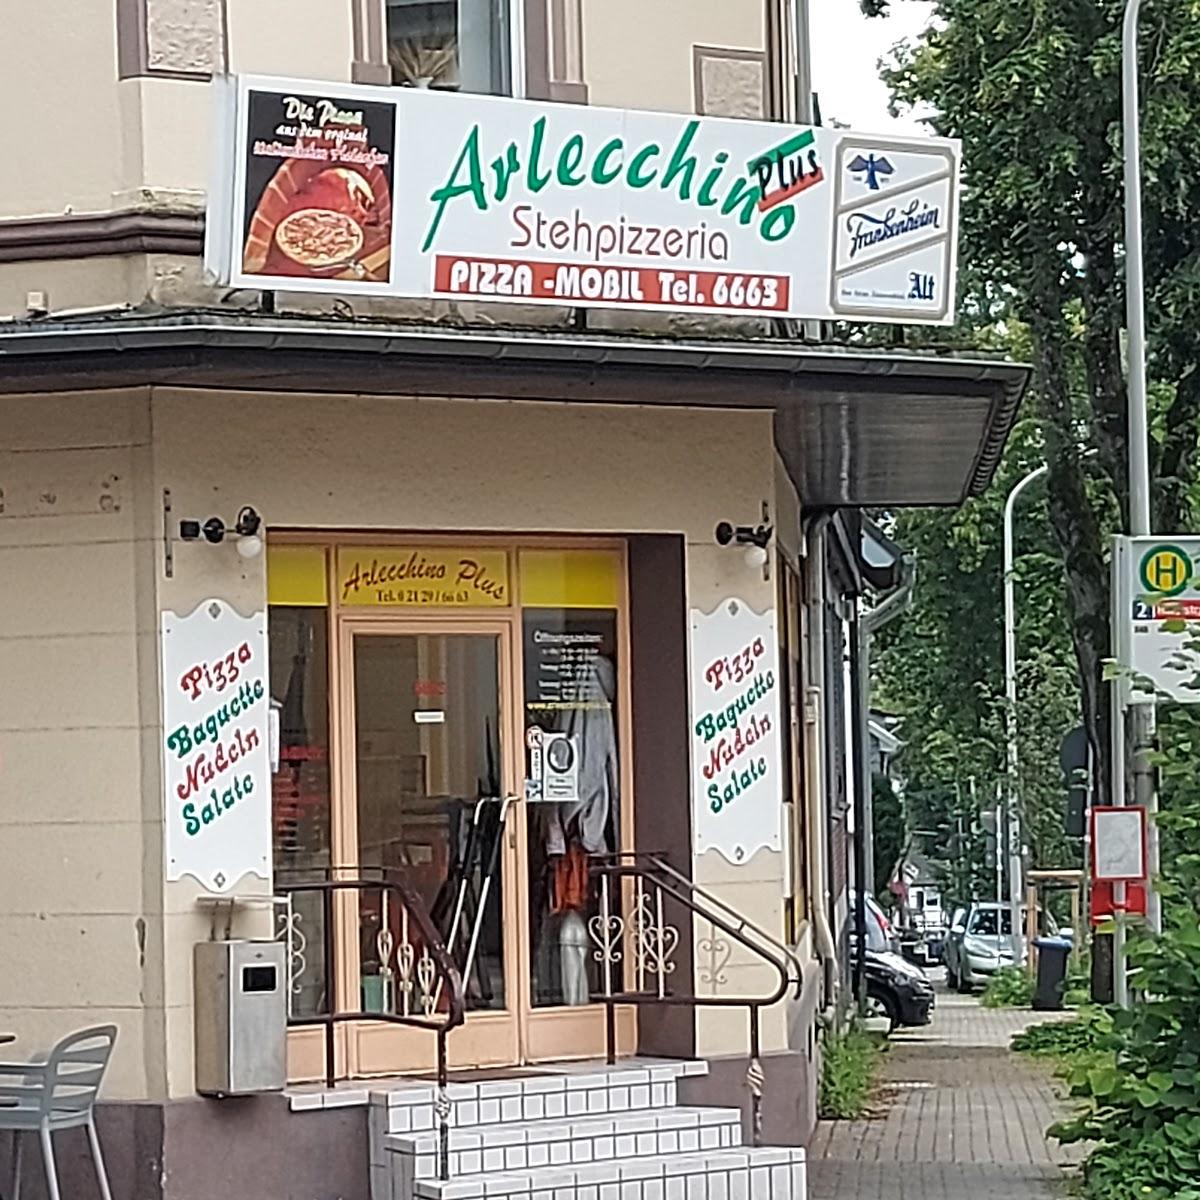 Restaurant "Arlecchino plus" in Haan